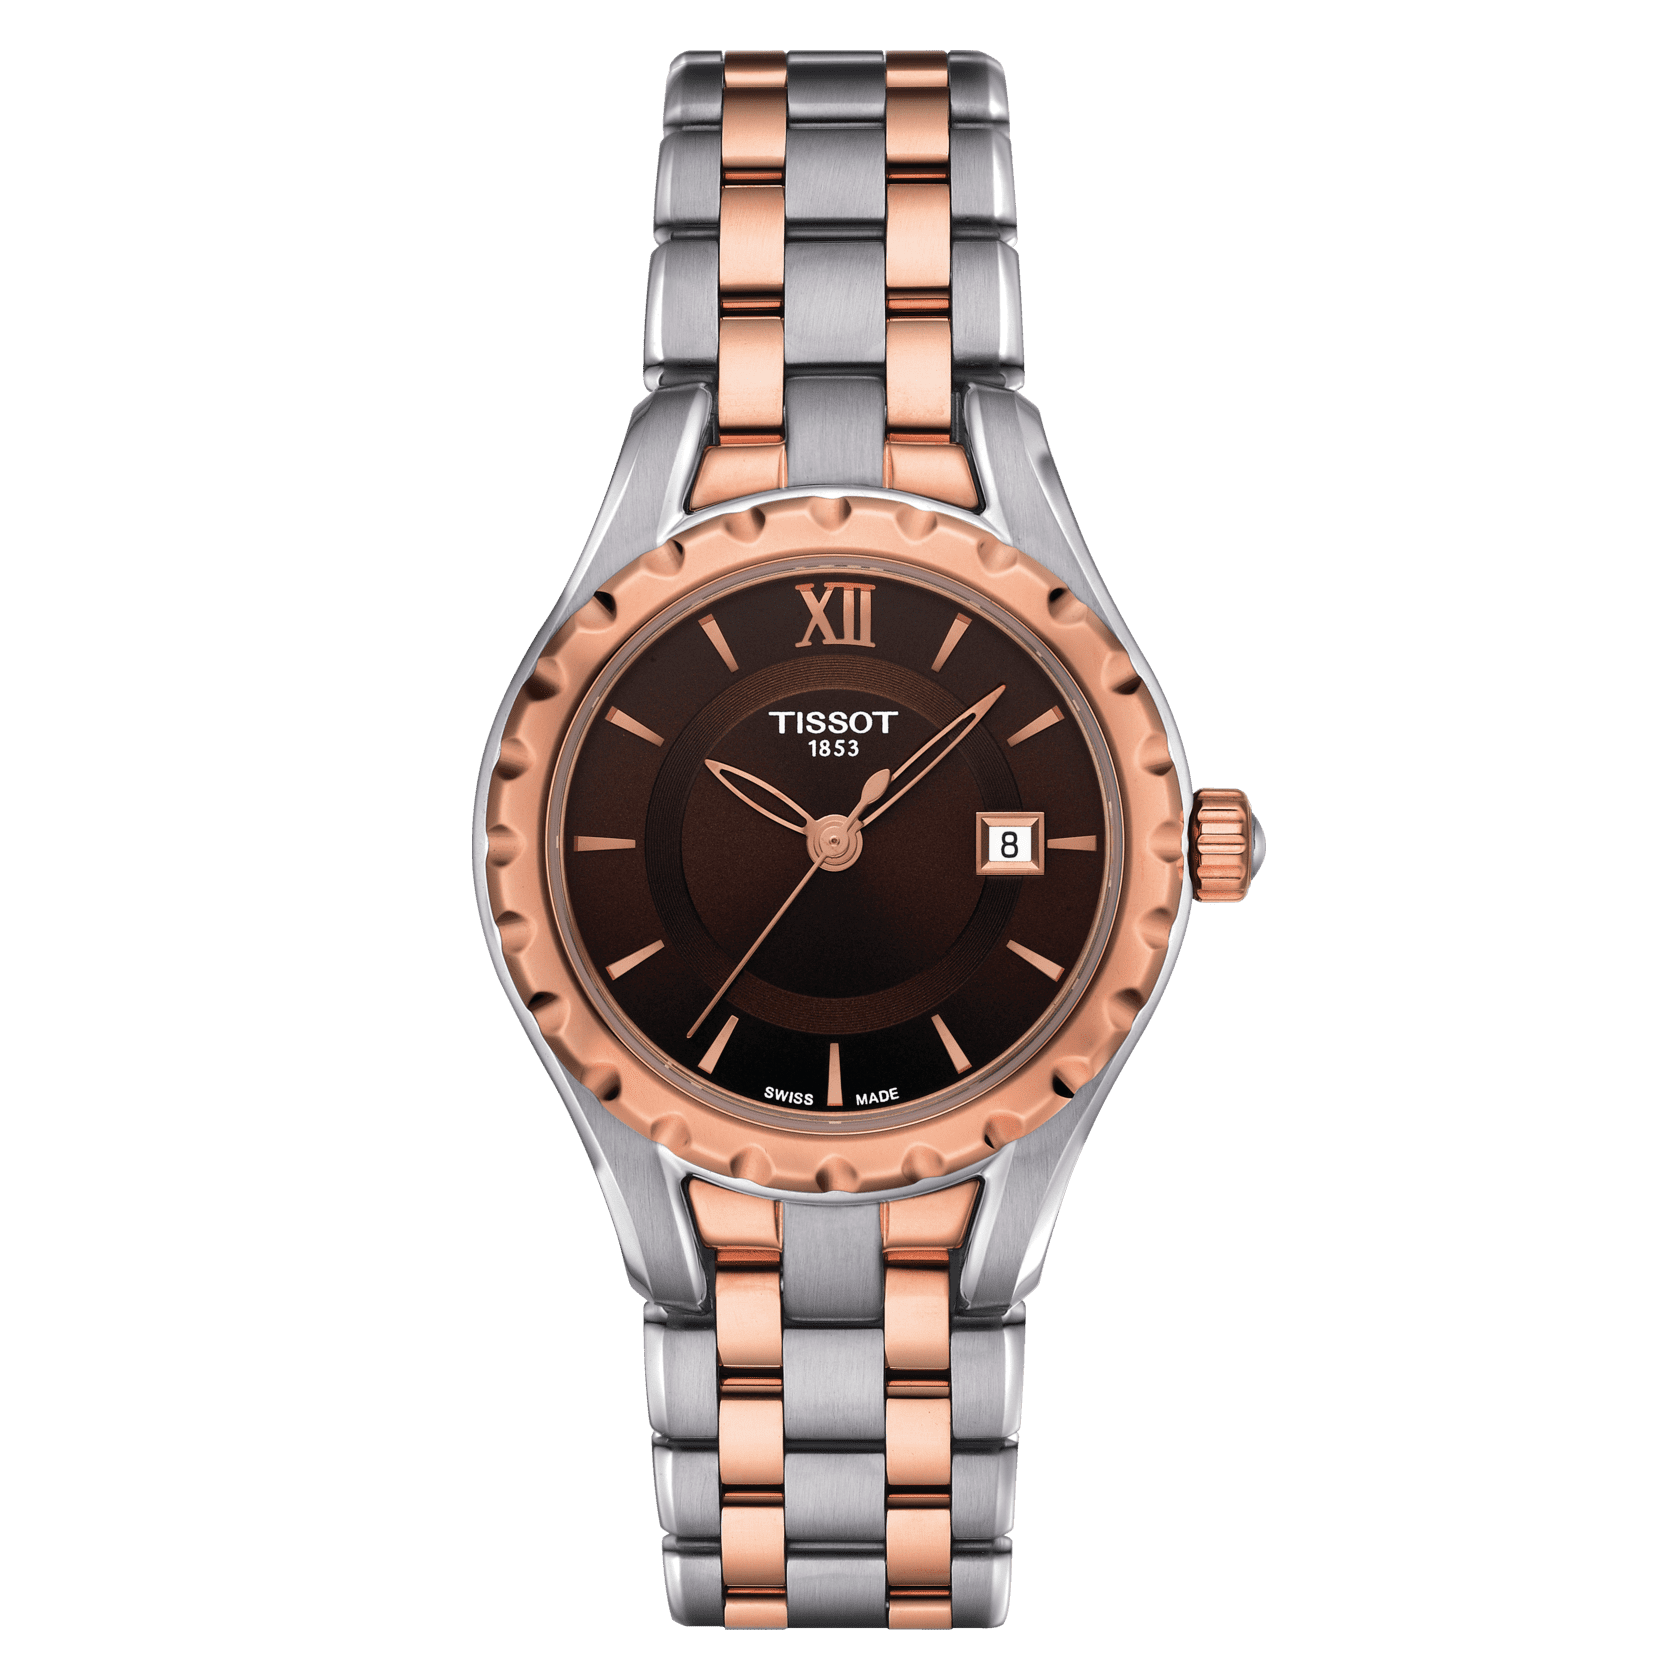 How Much Is A Fake Rolex Watch Worth